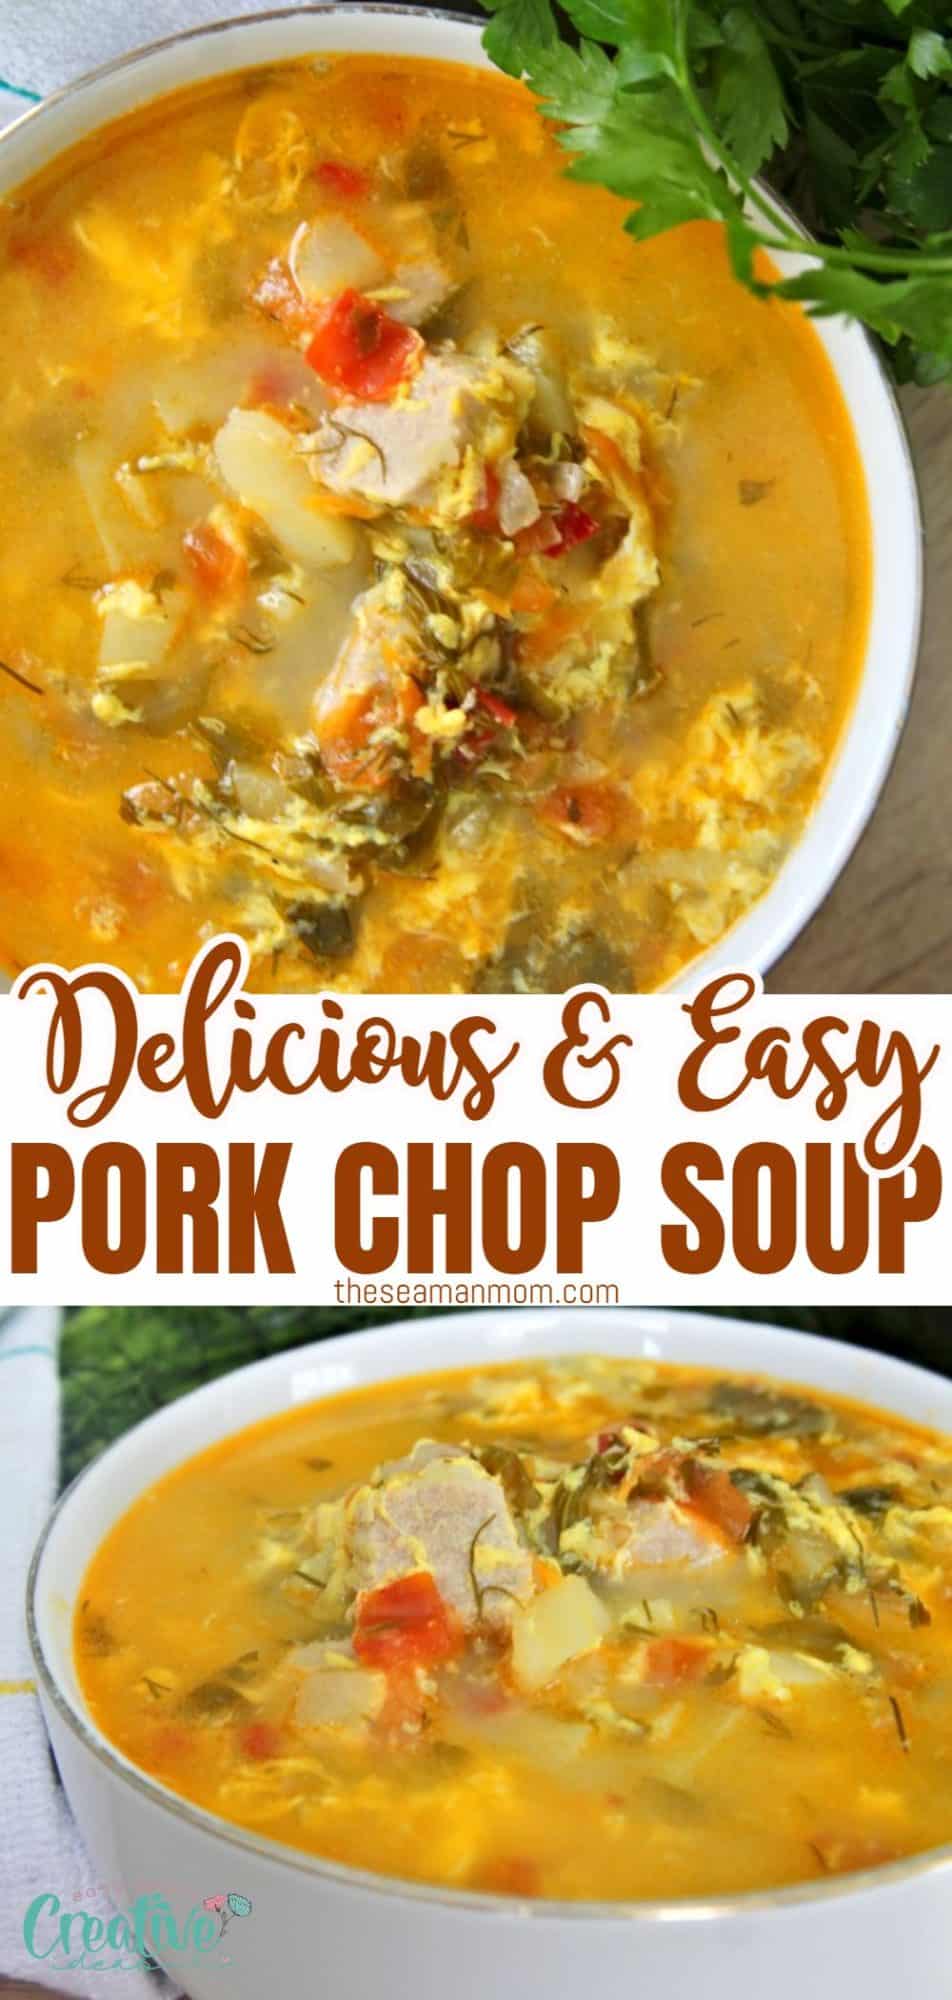 Pork chops soup with vegetables